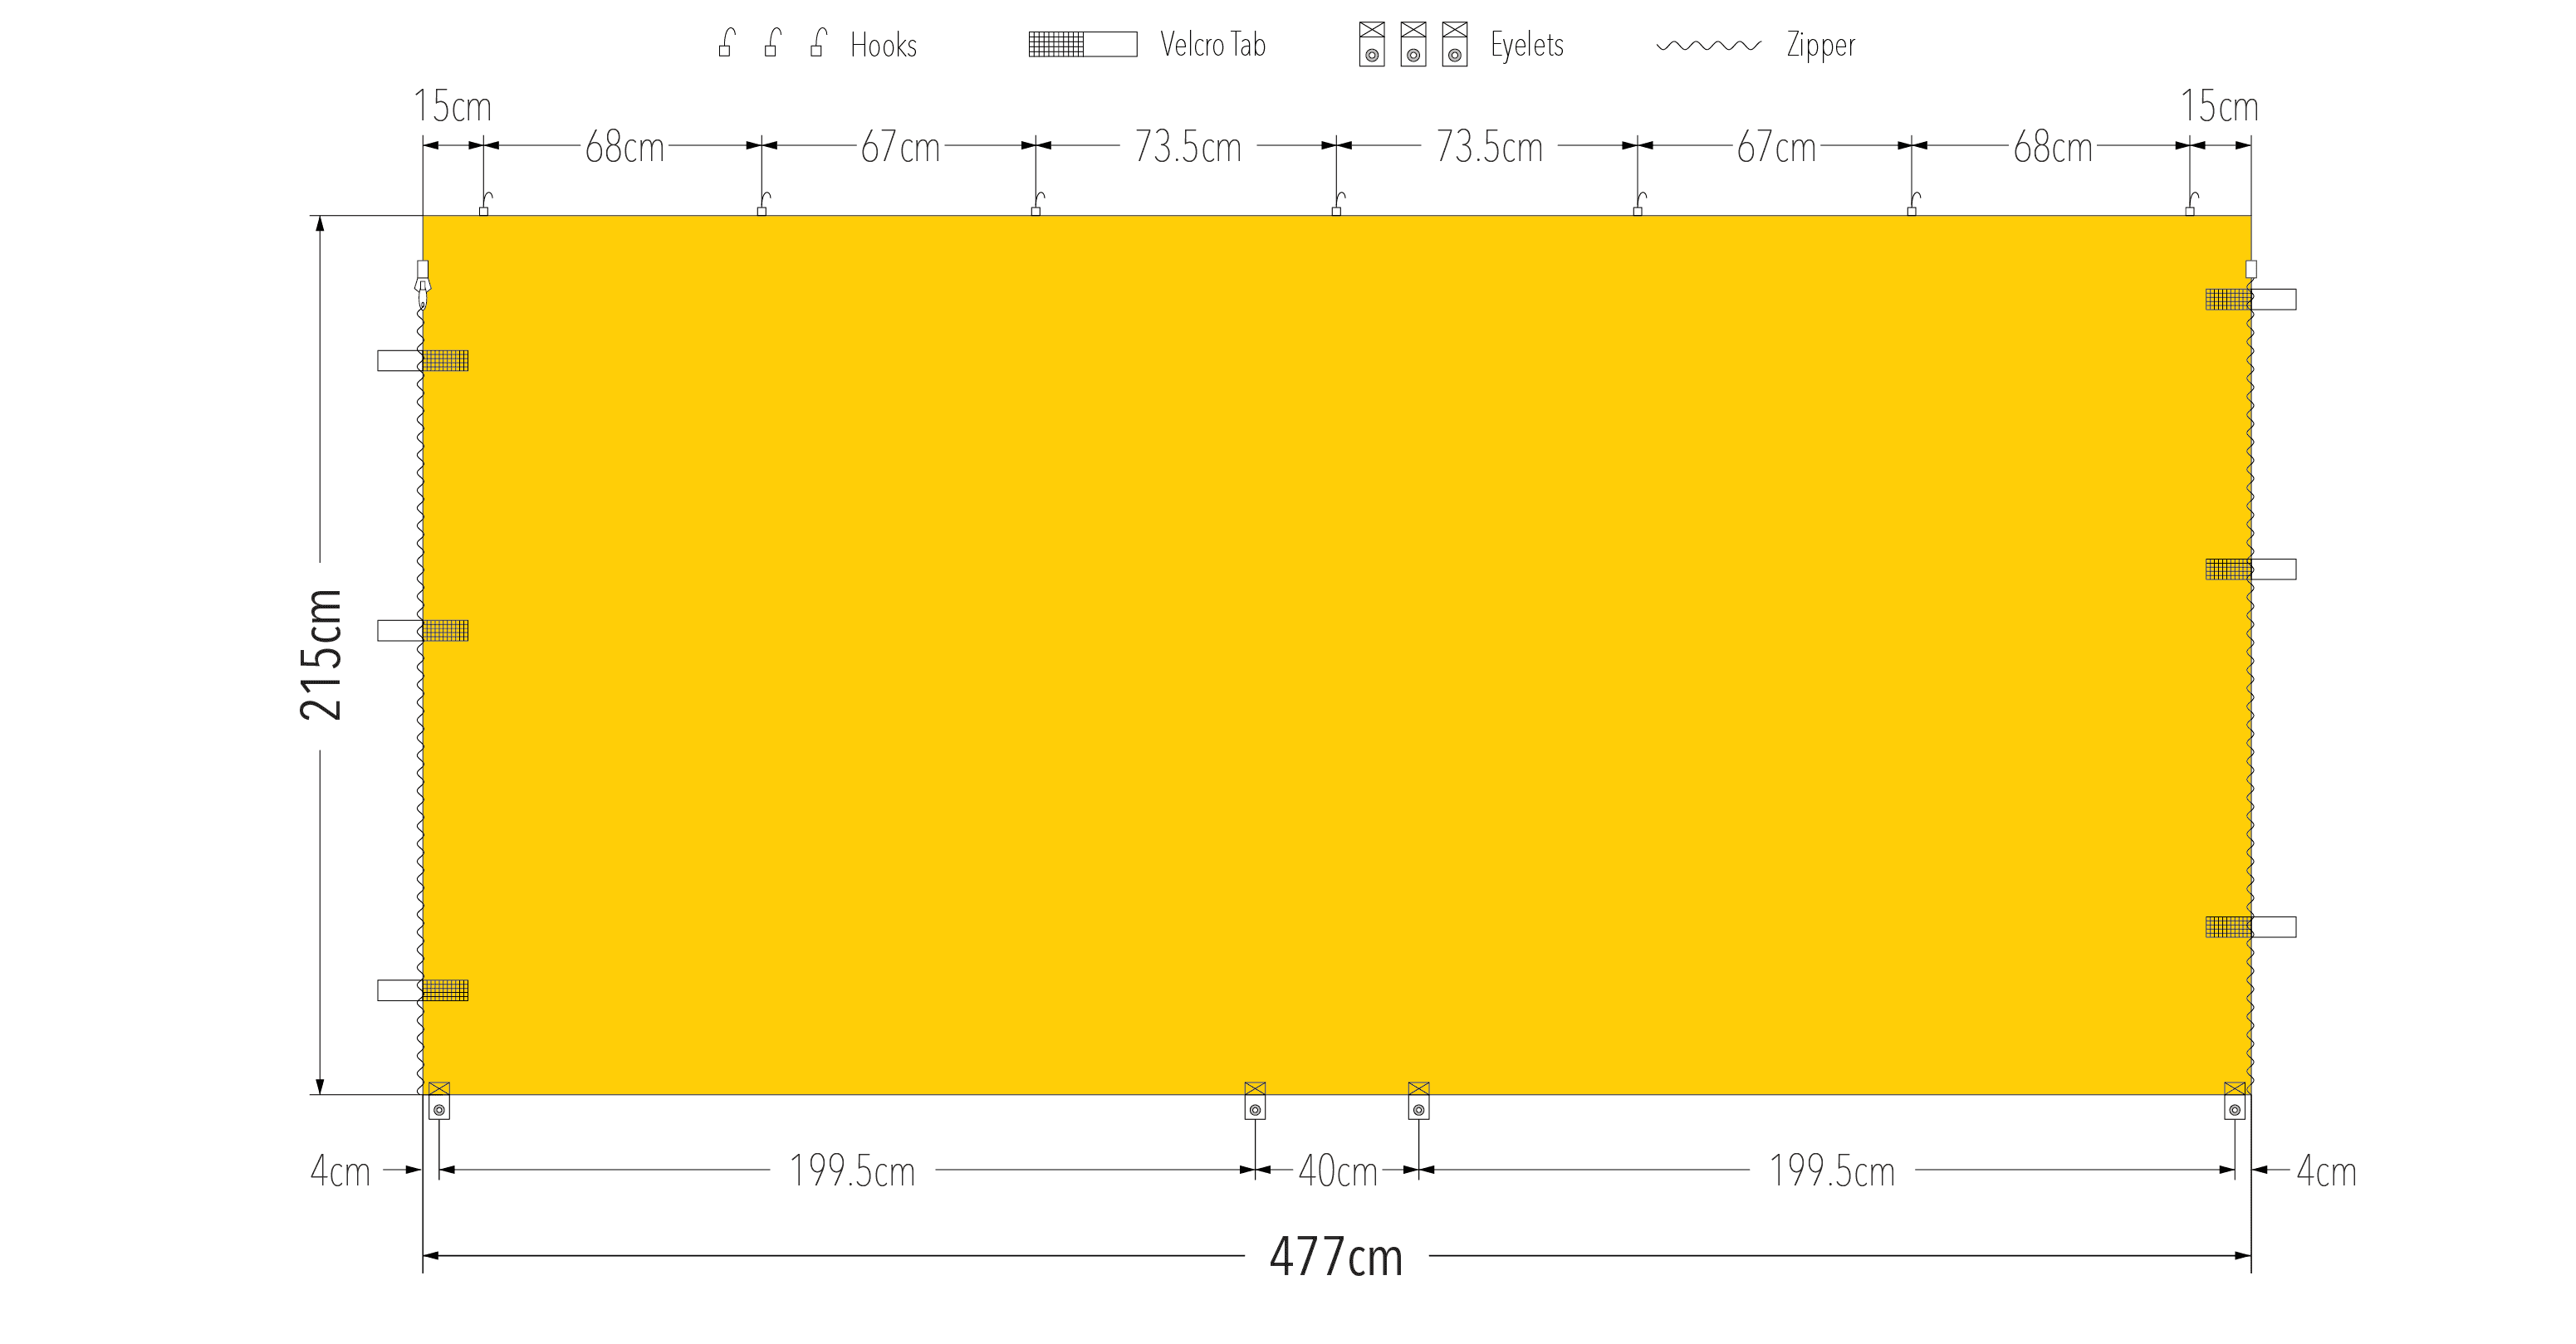 4.5m wall eyelet spacing diagram